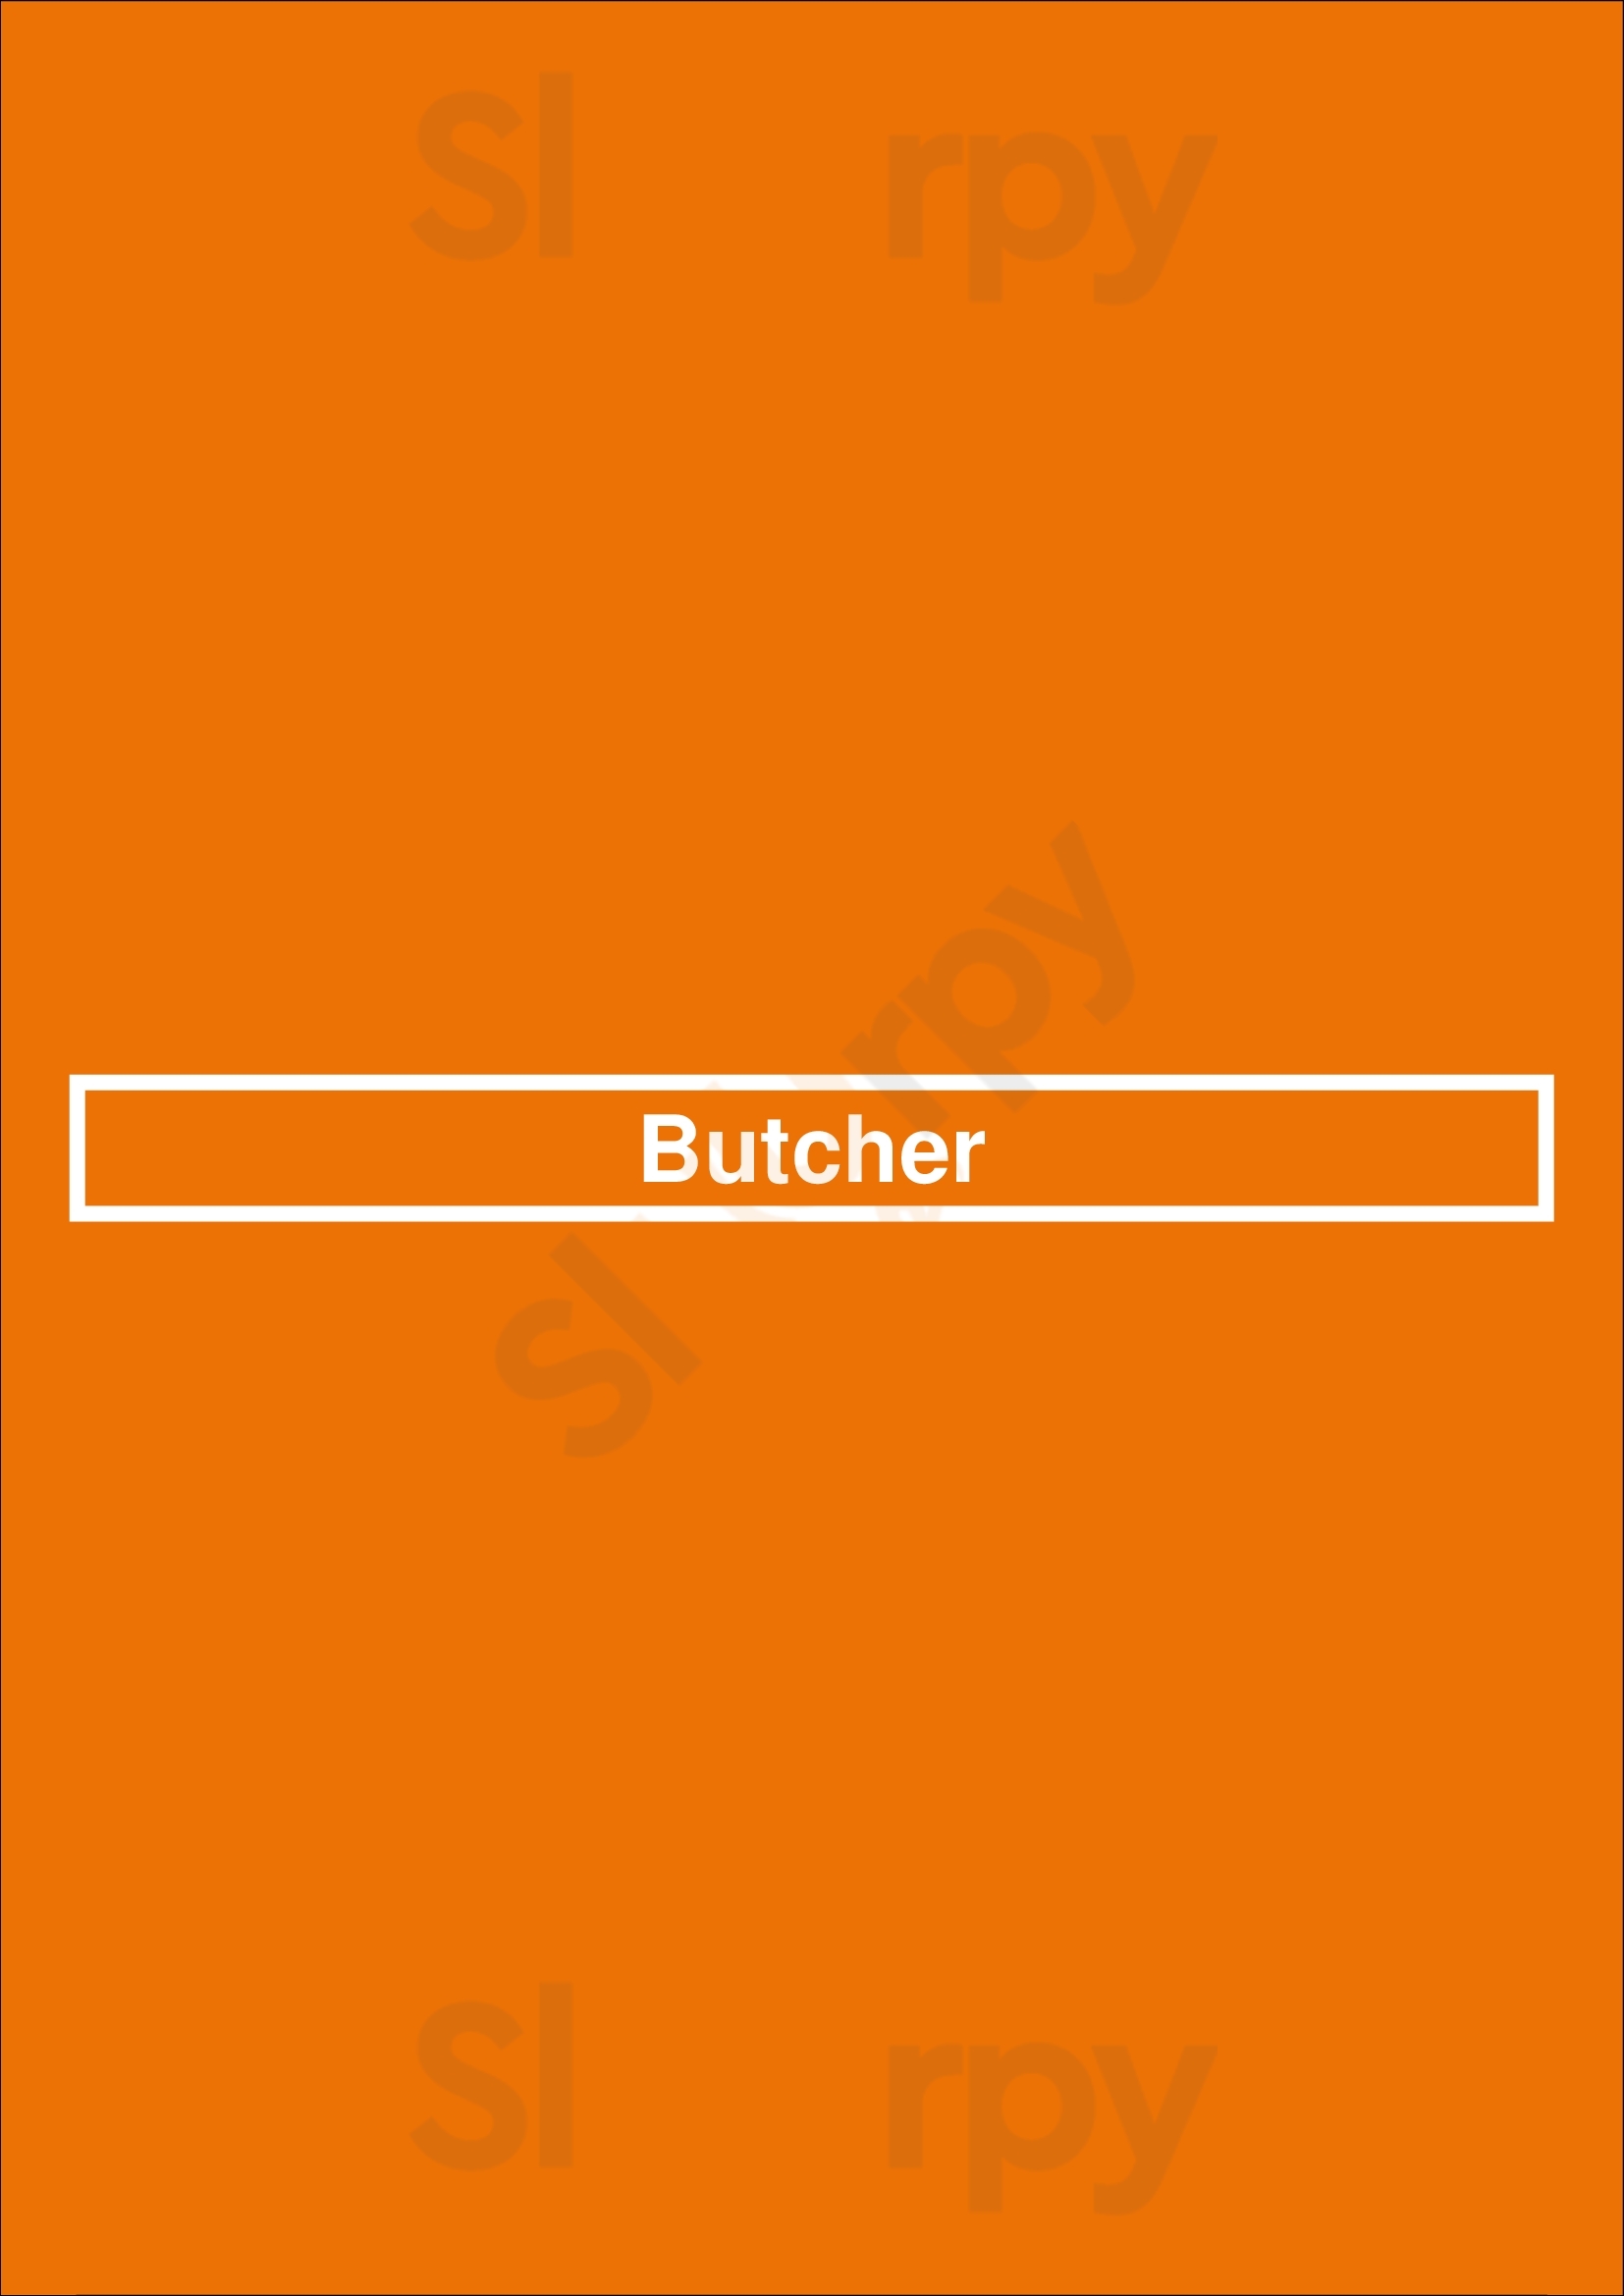 Butcher Louvain-la-Neuve Menu - 1